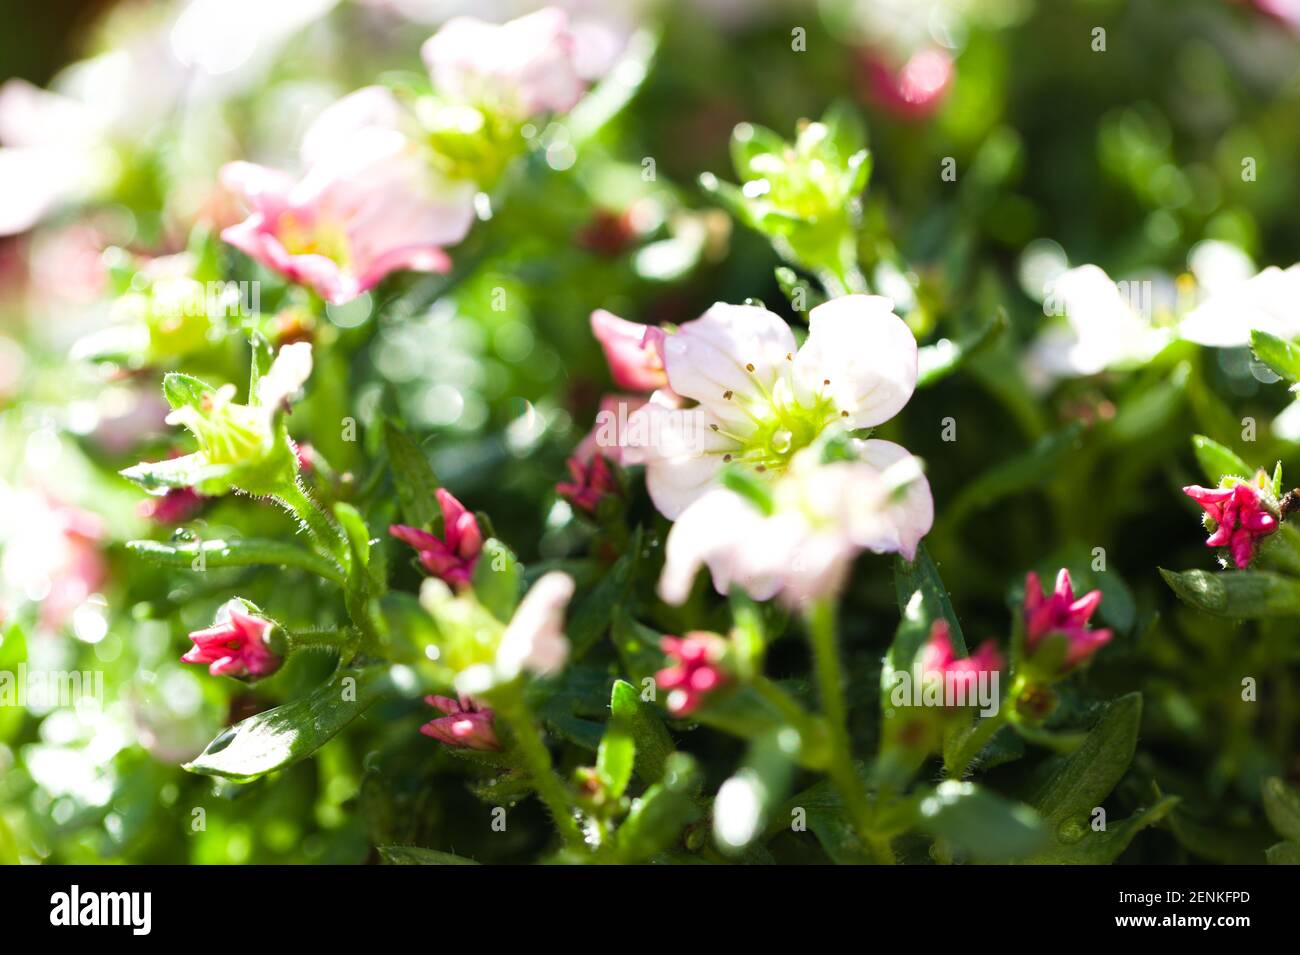 Close-up of White & Pink flowering Saxifraga × arendsii Stock Photo